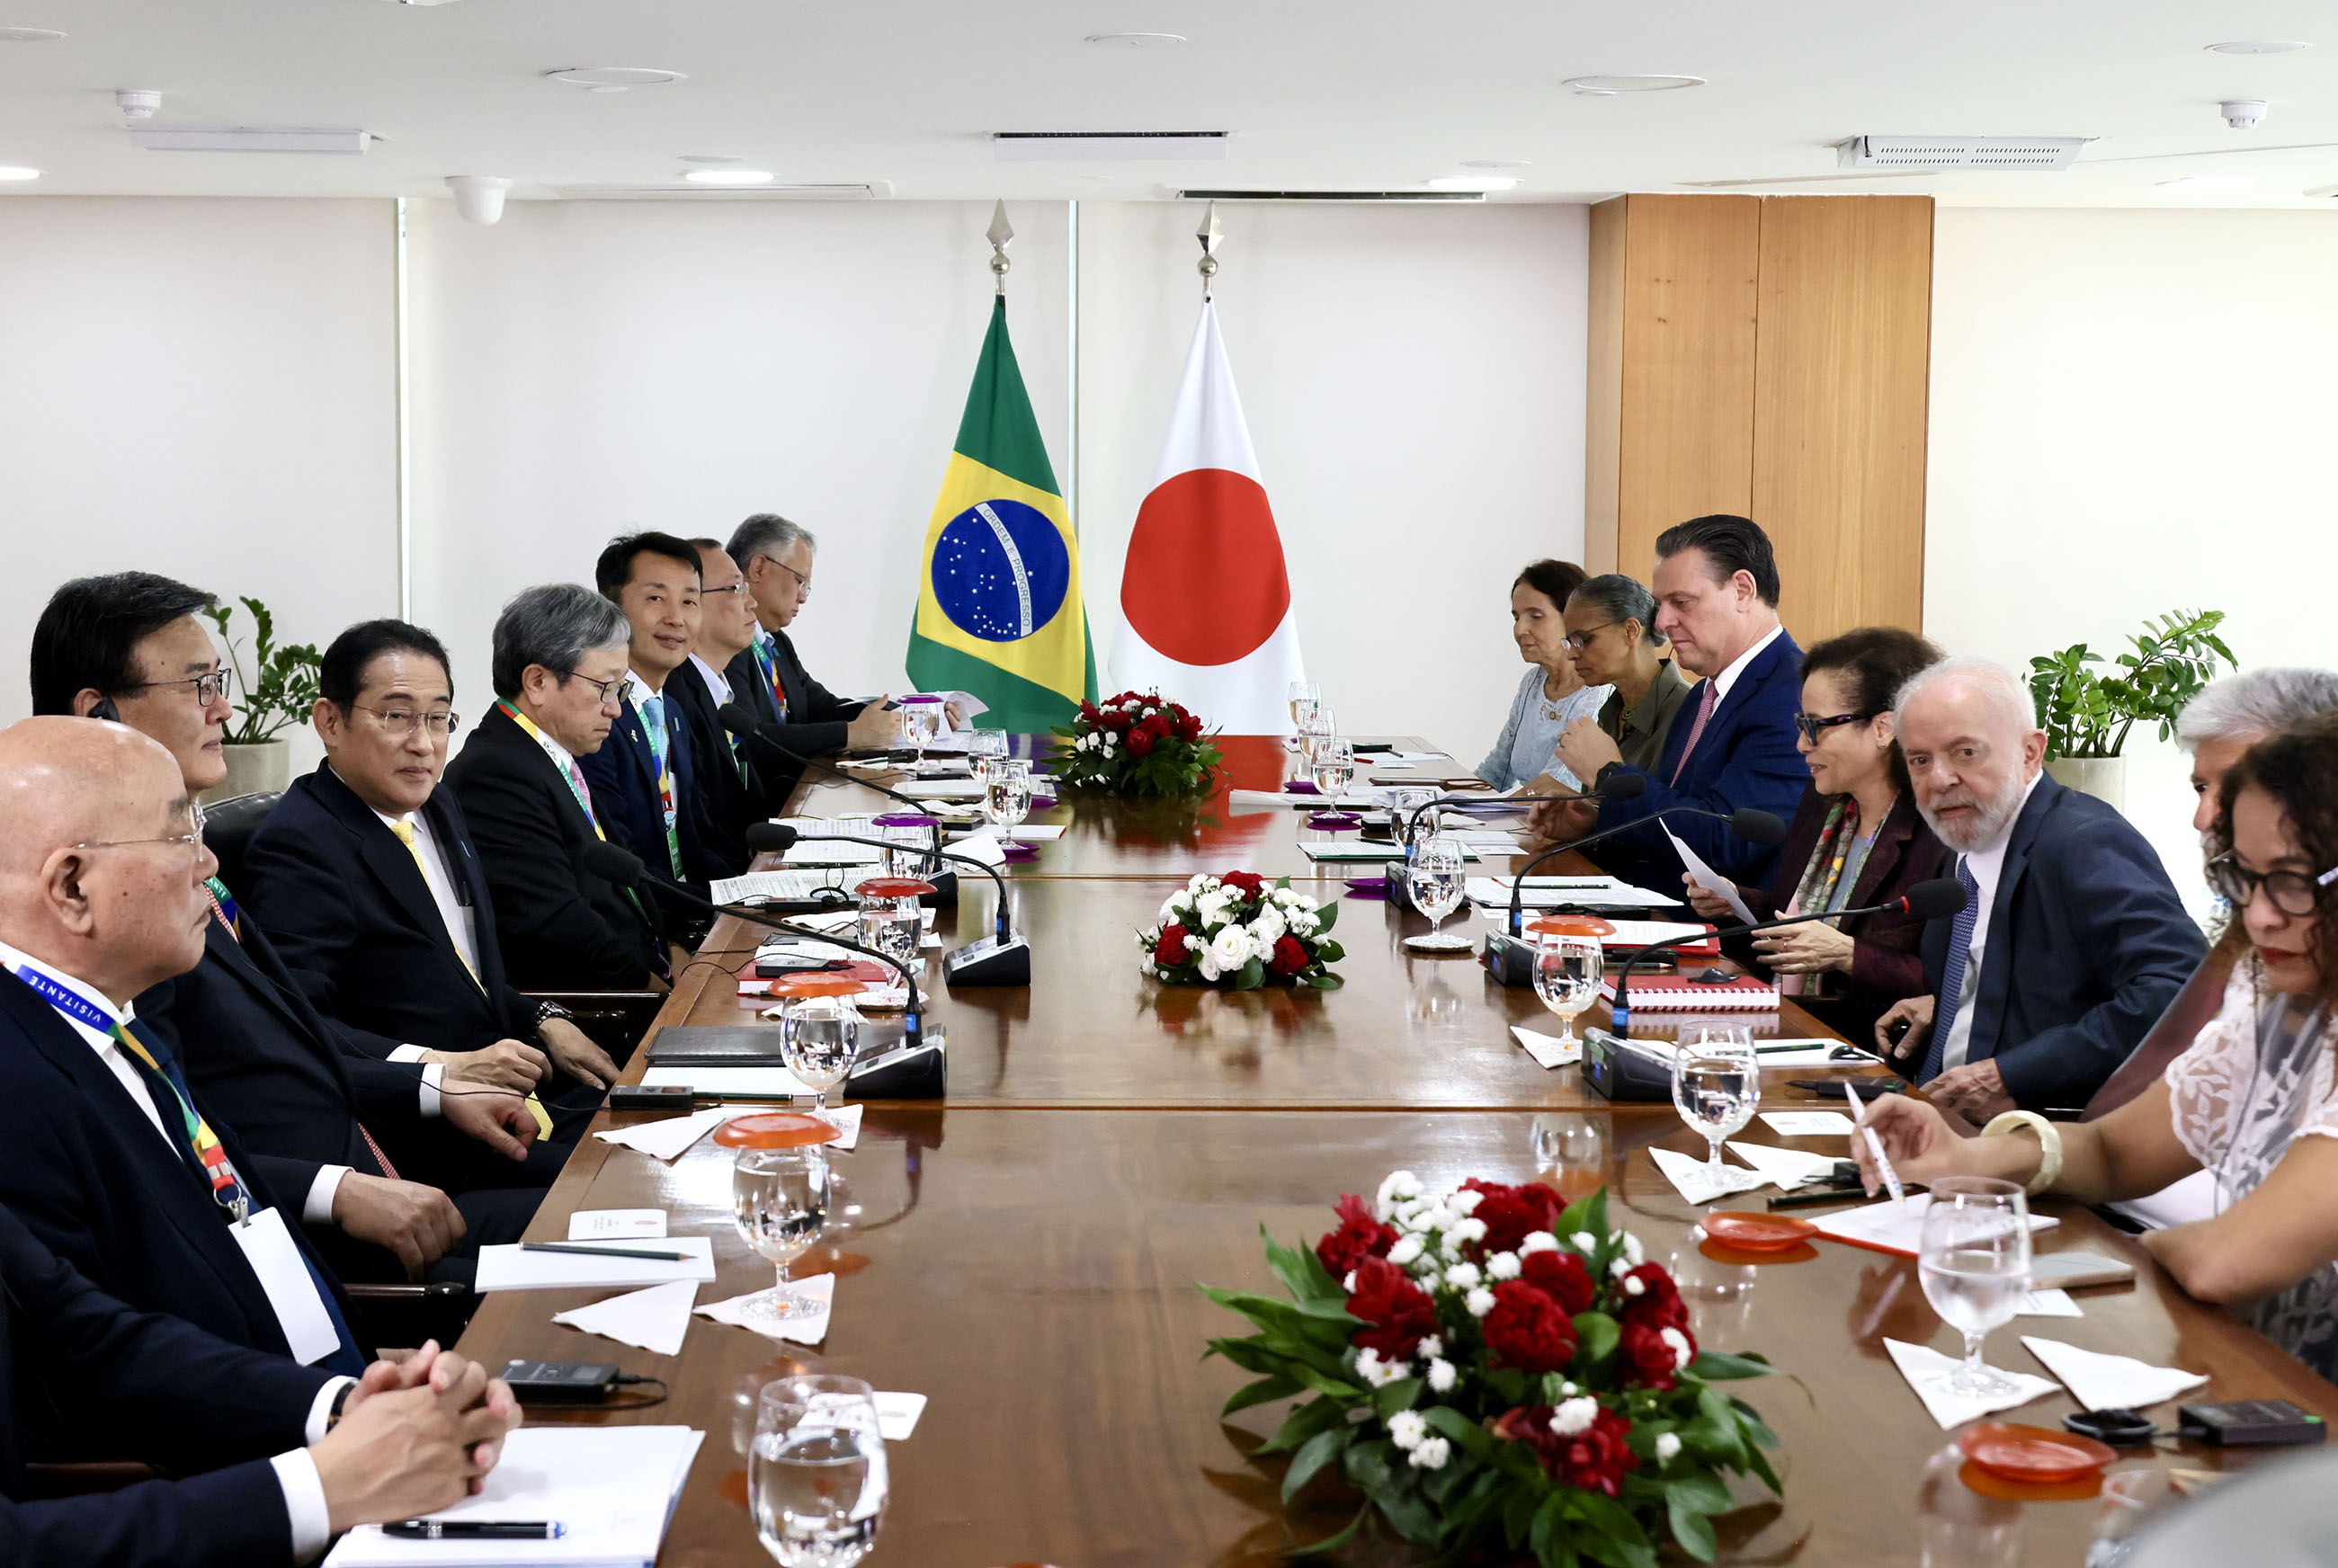 Japan-Brazil Summit Meeting (2)